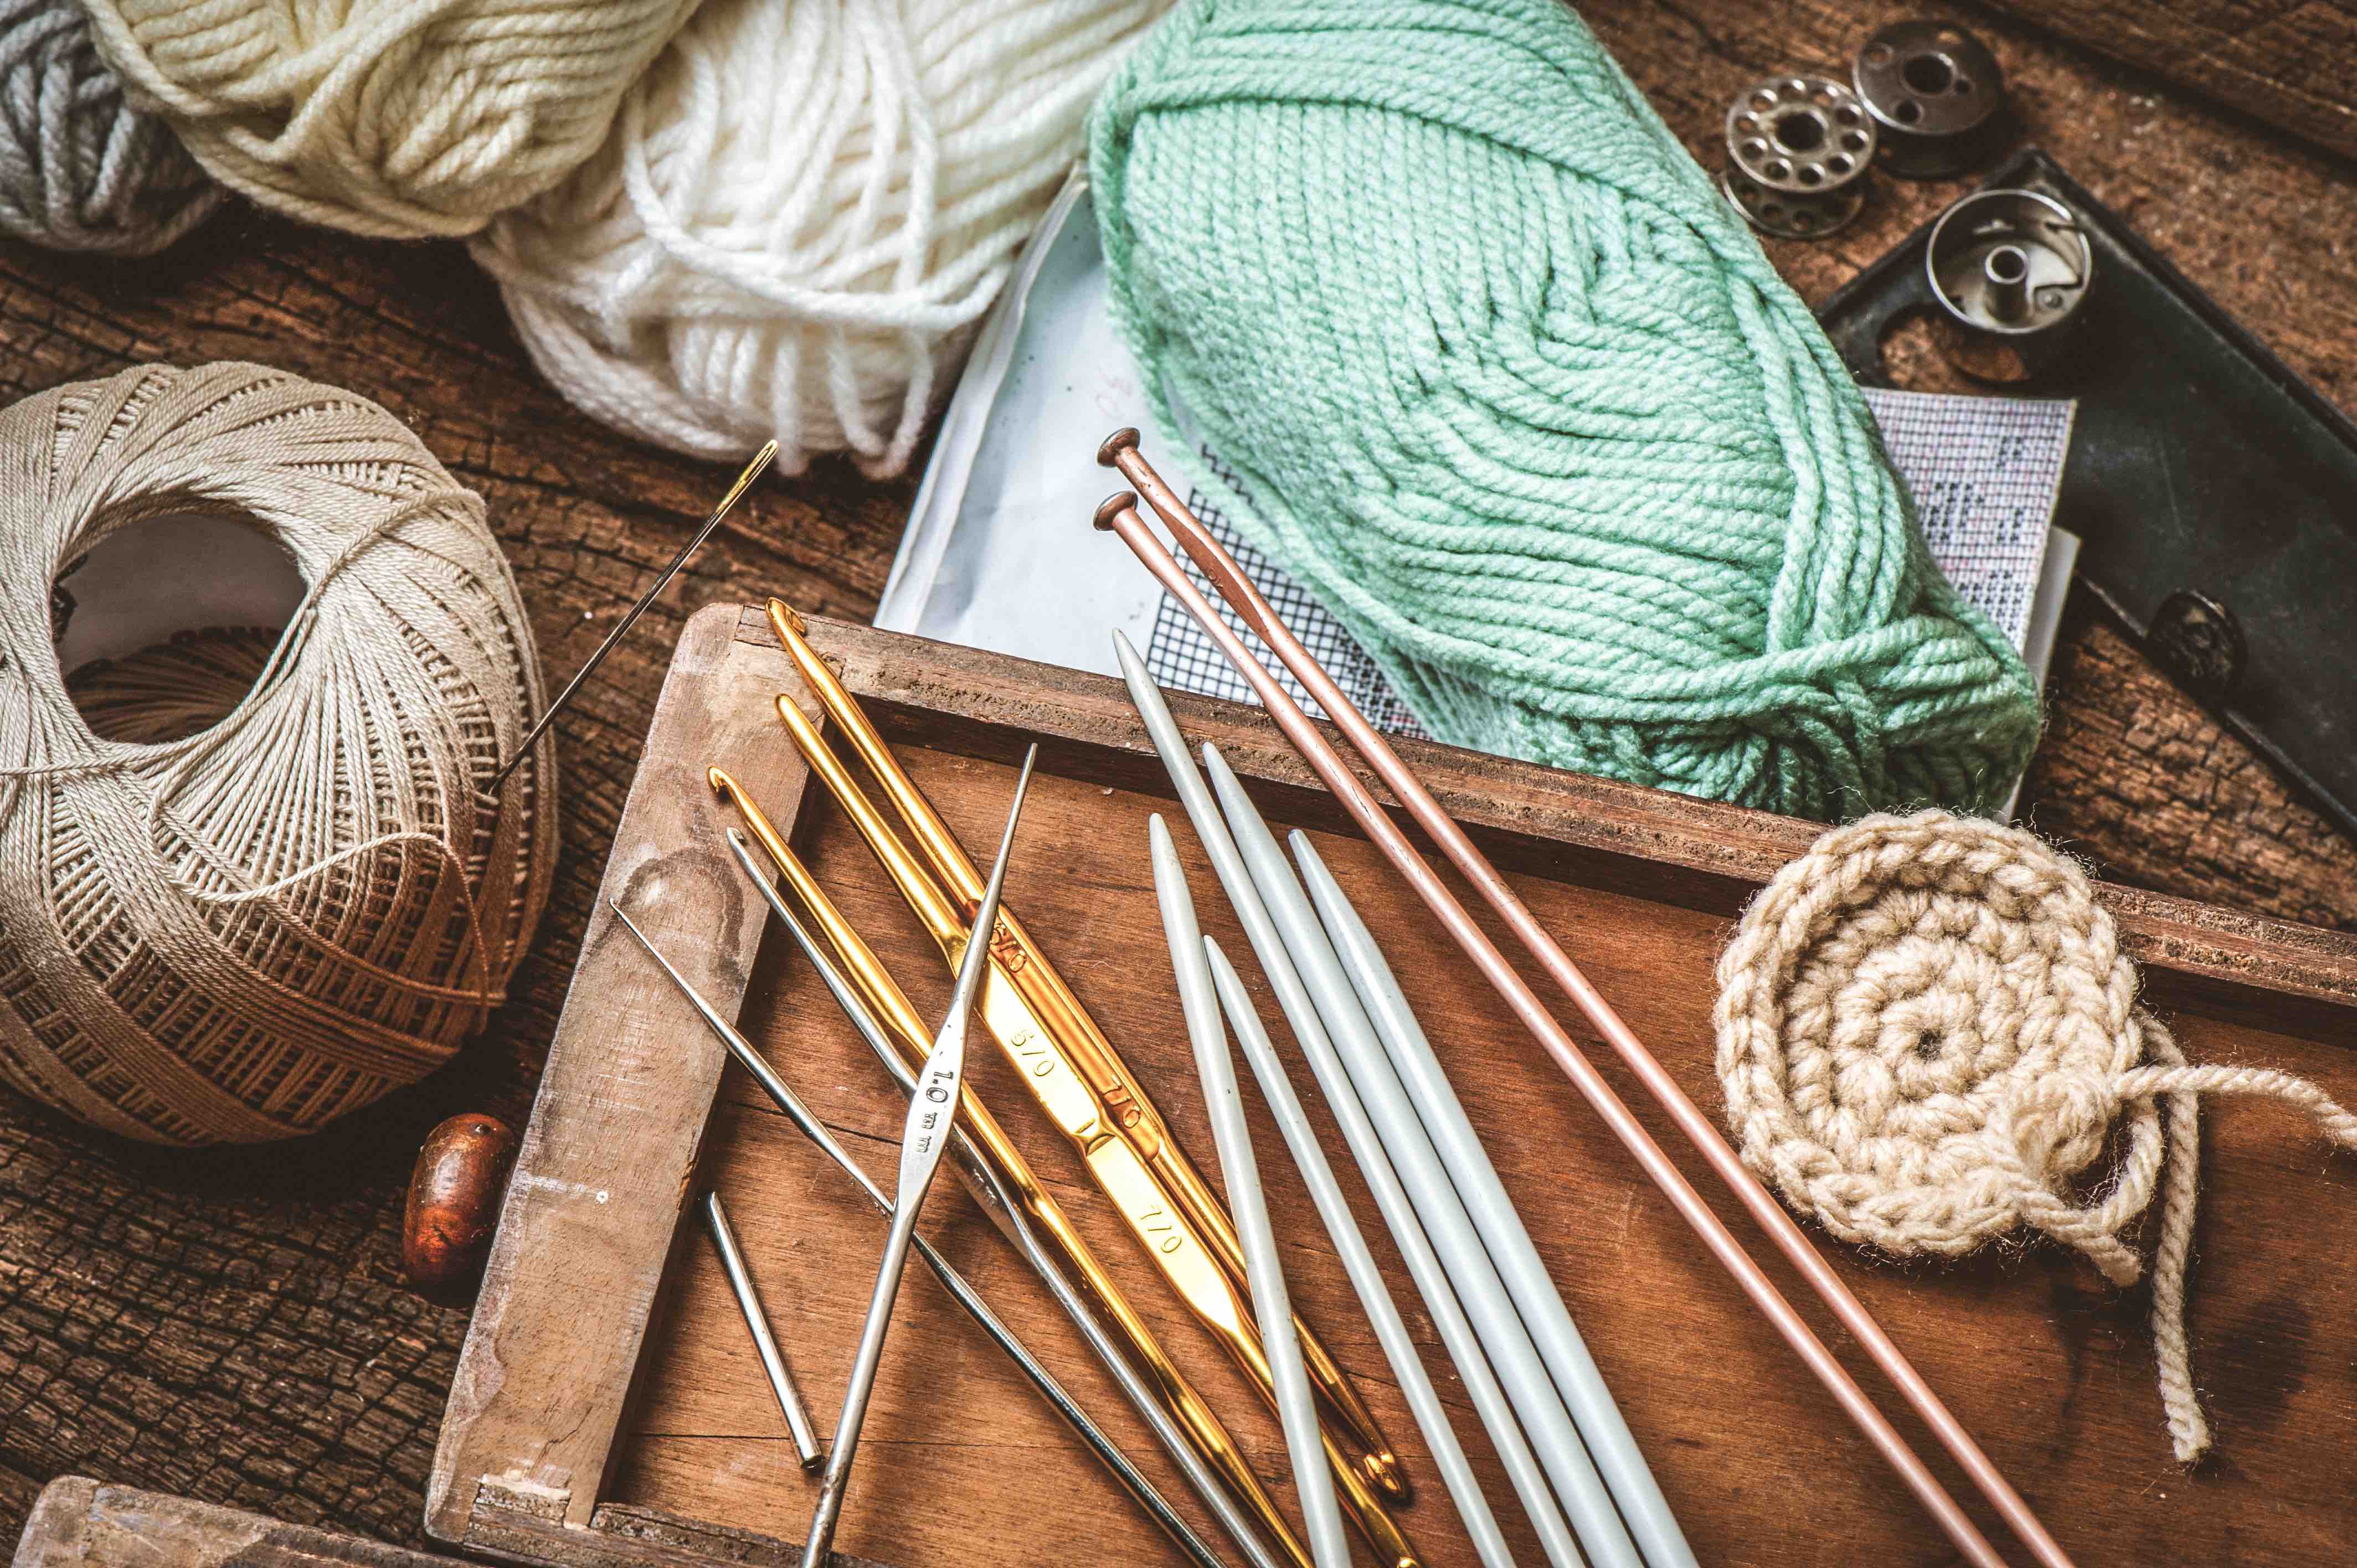 Tools Hanging Rope Plastic Needle Crochet Knit Knitting Row